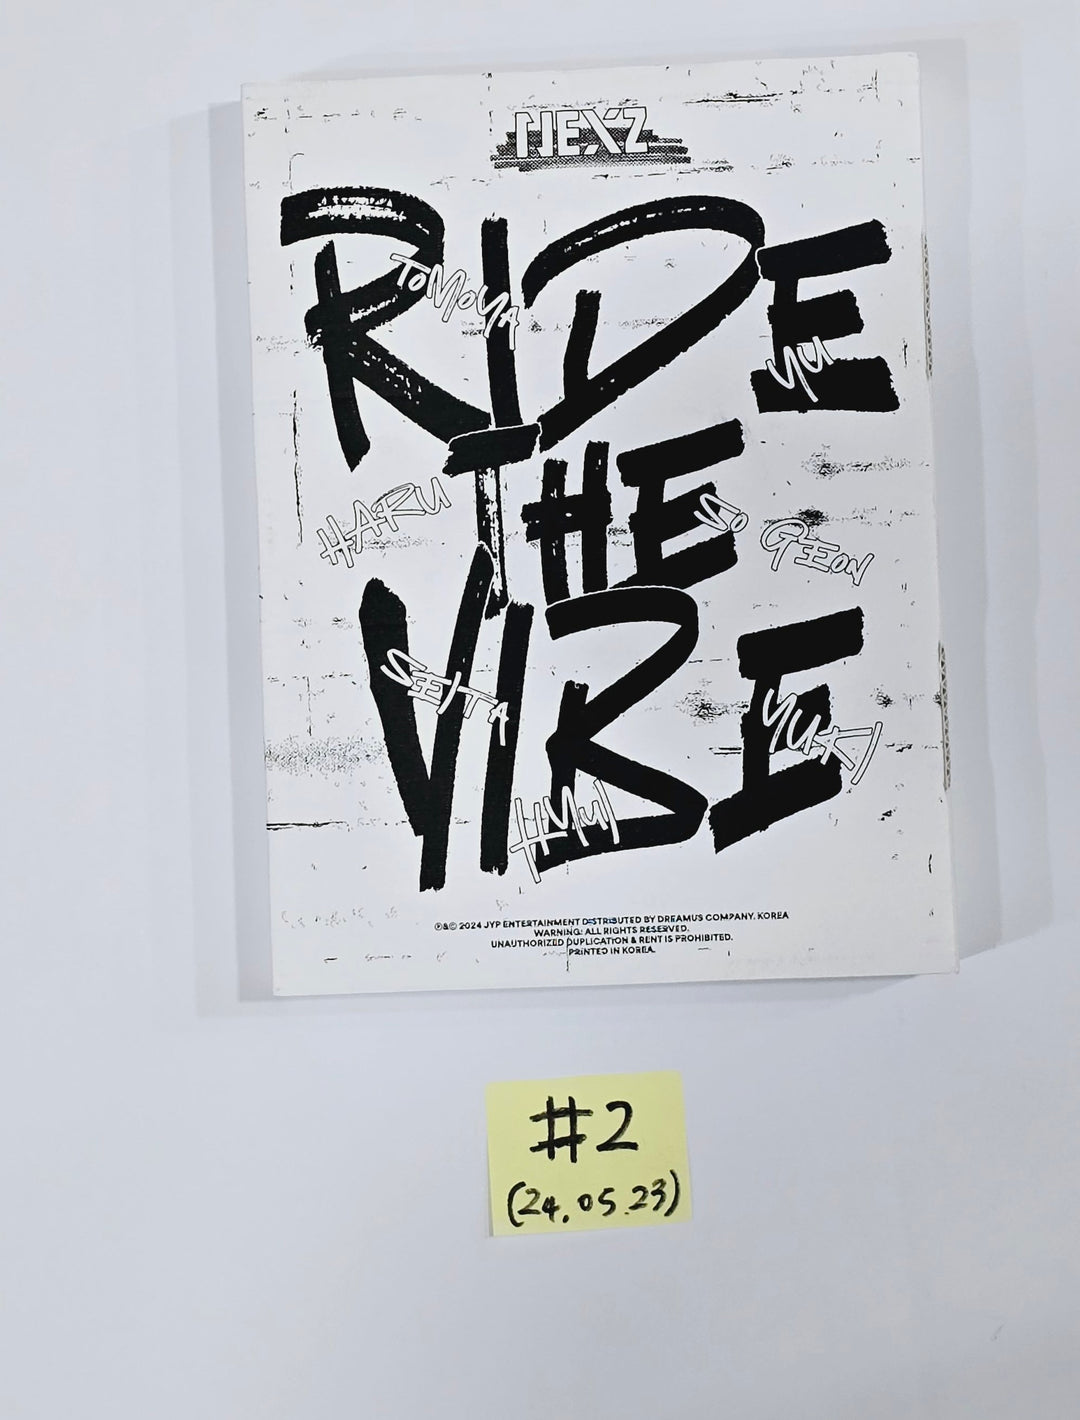 NEXZ "Ride the Vibe" - Hand Autographed(Signed) Promo Album [24.5.23]